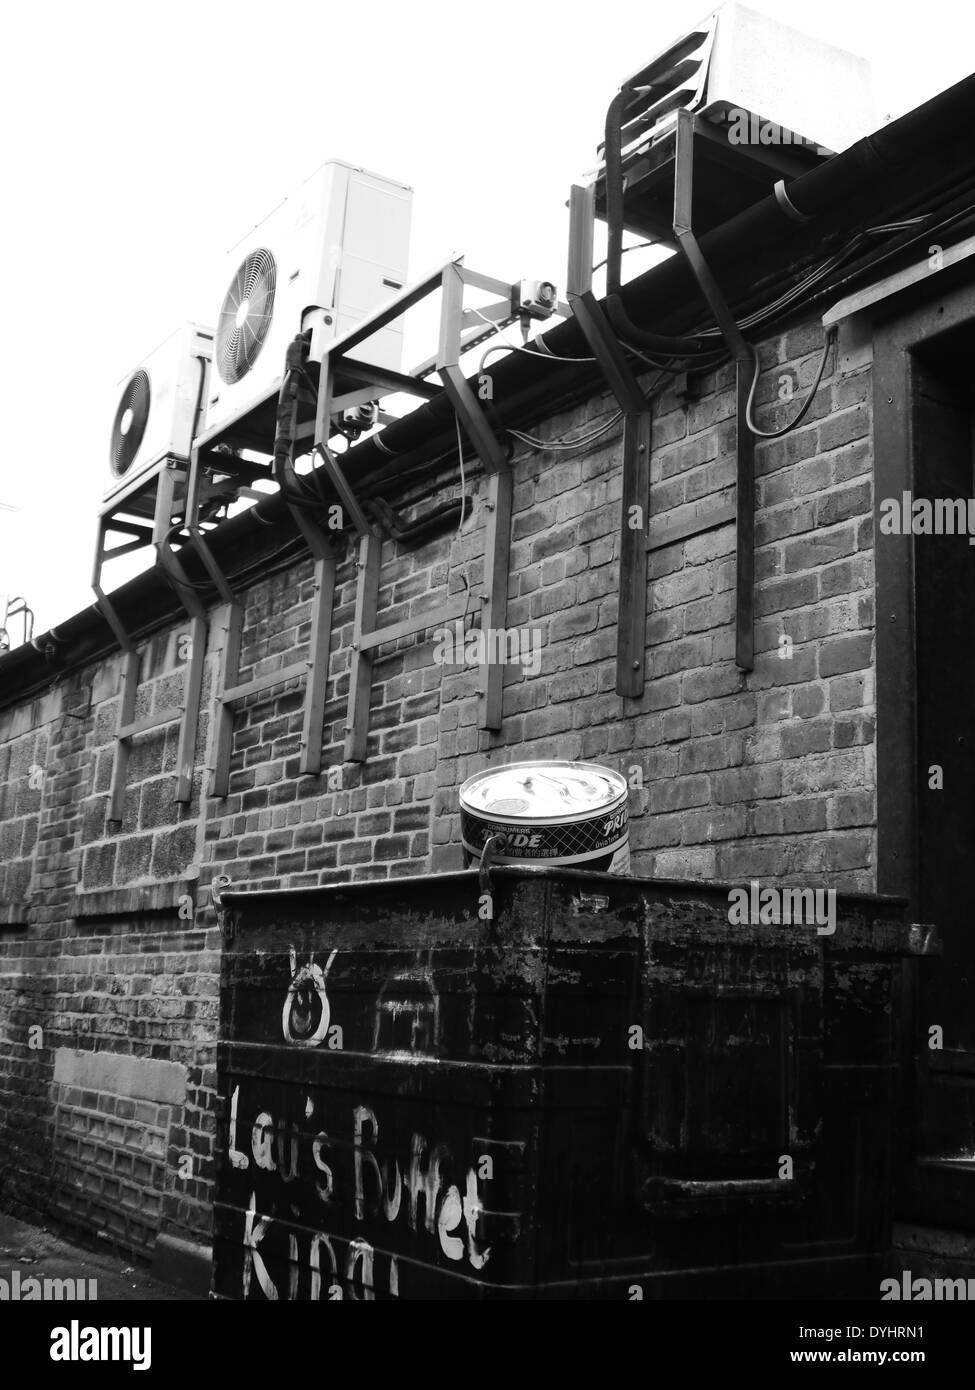 Monochrome image - Urban street scene showing ventilation / extractor fans and wheelie refuse bin, Newcastle upon Tyne, England Stock Photo